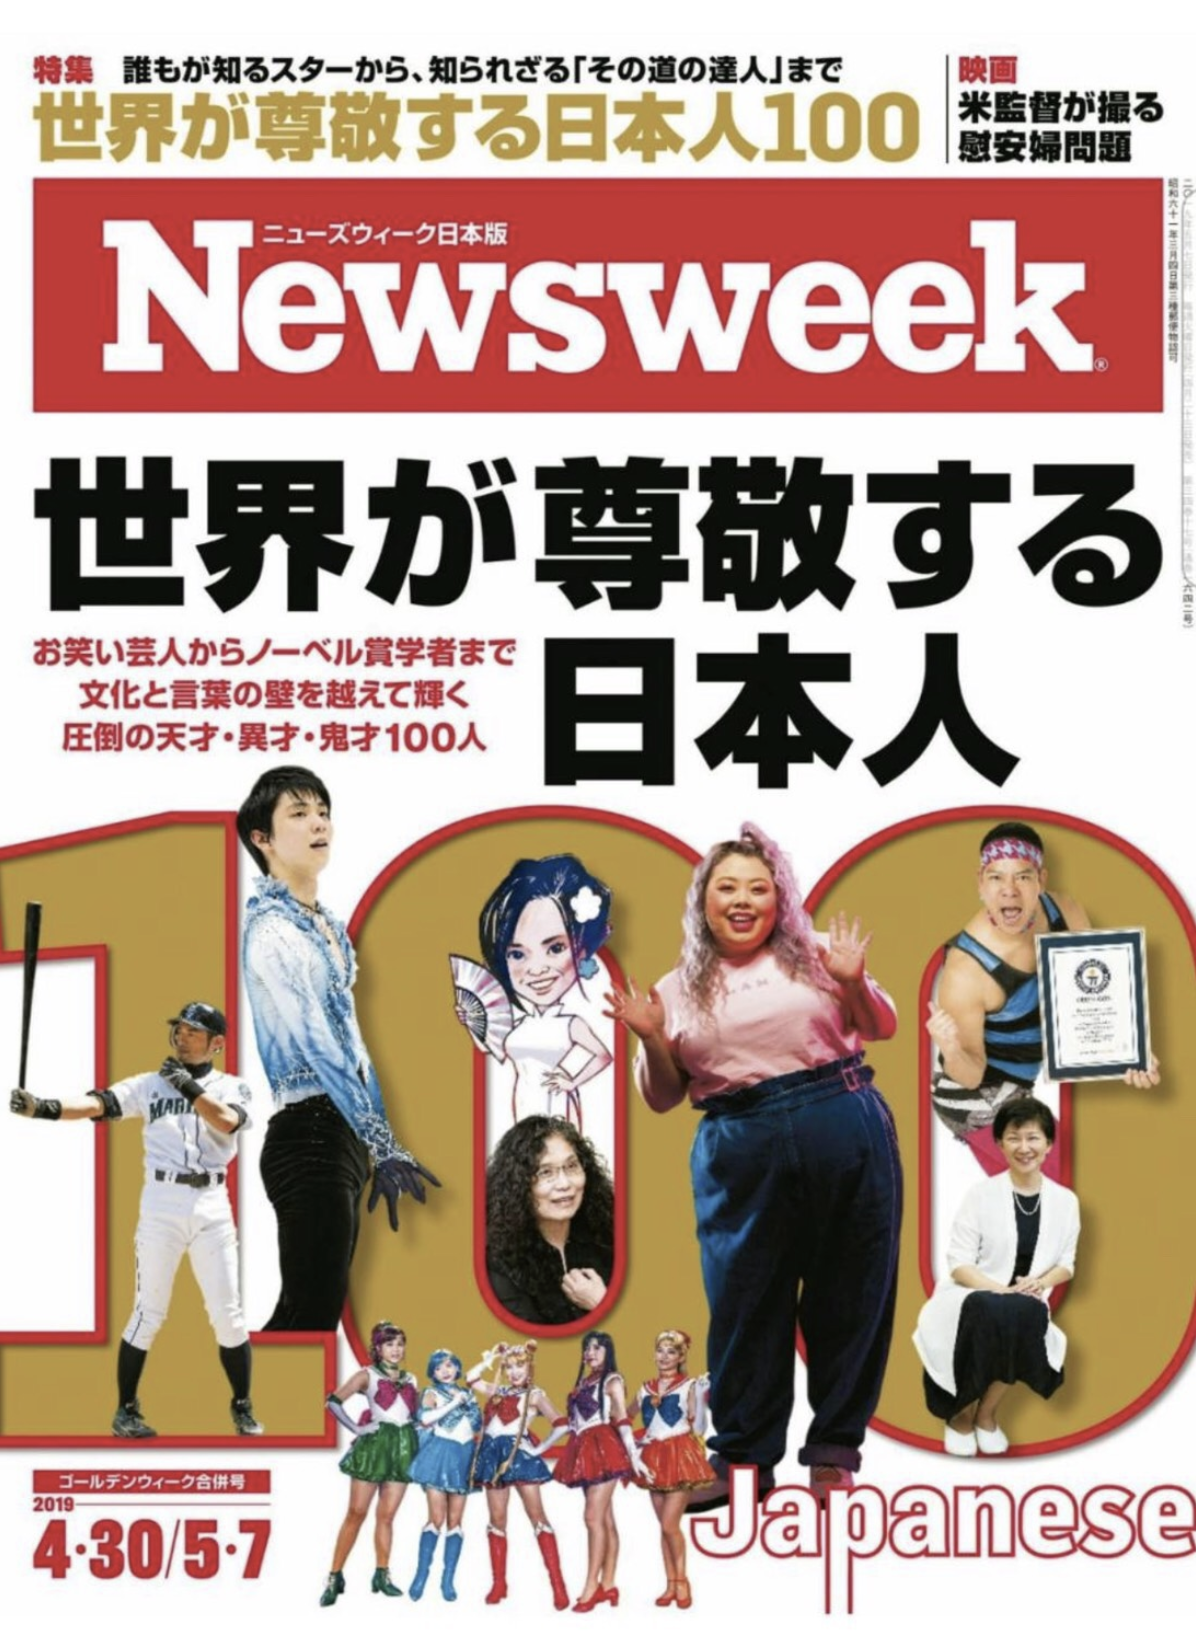 『NEWSWEEK』2019年4月30日・5月7日 合併号